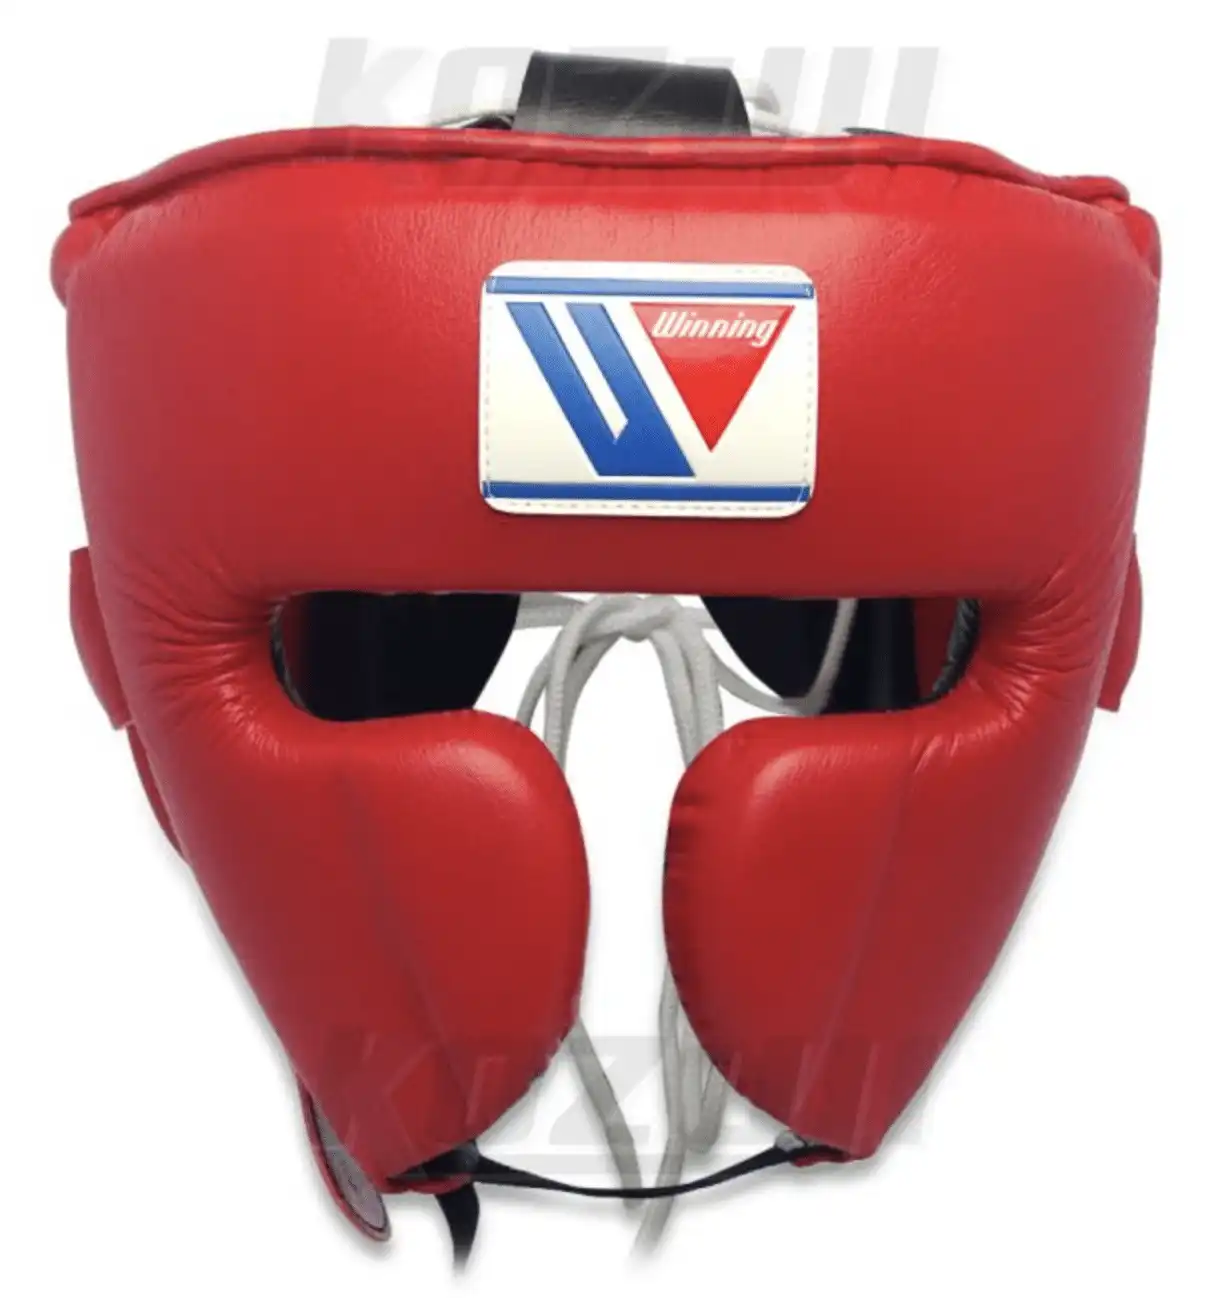 Winning Boxing Headgear Open Face